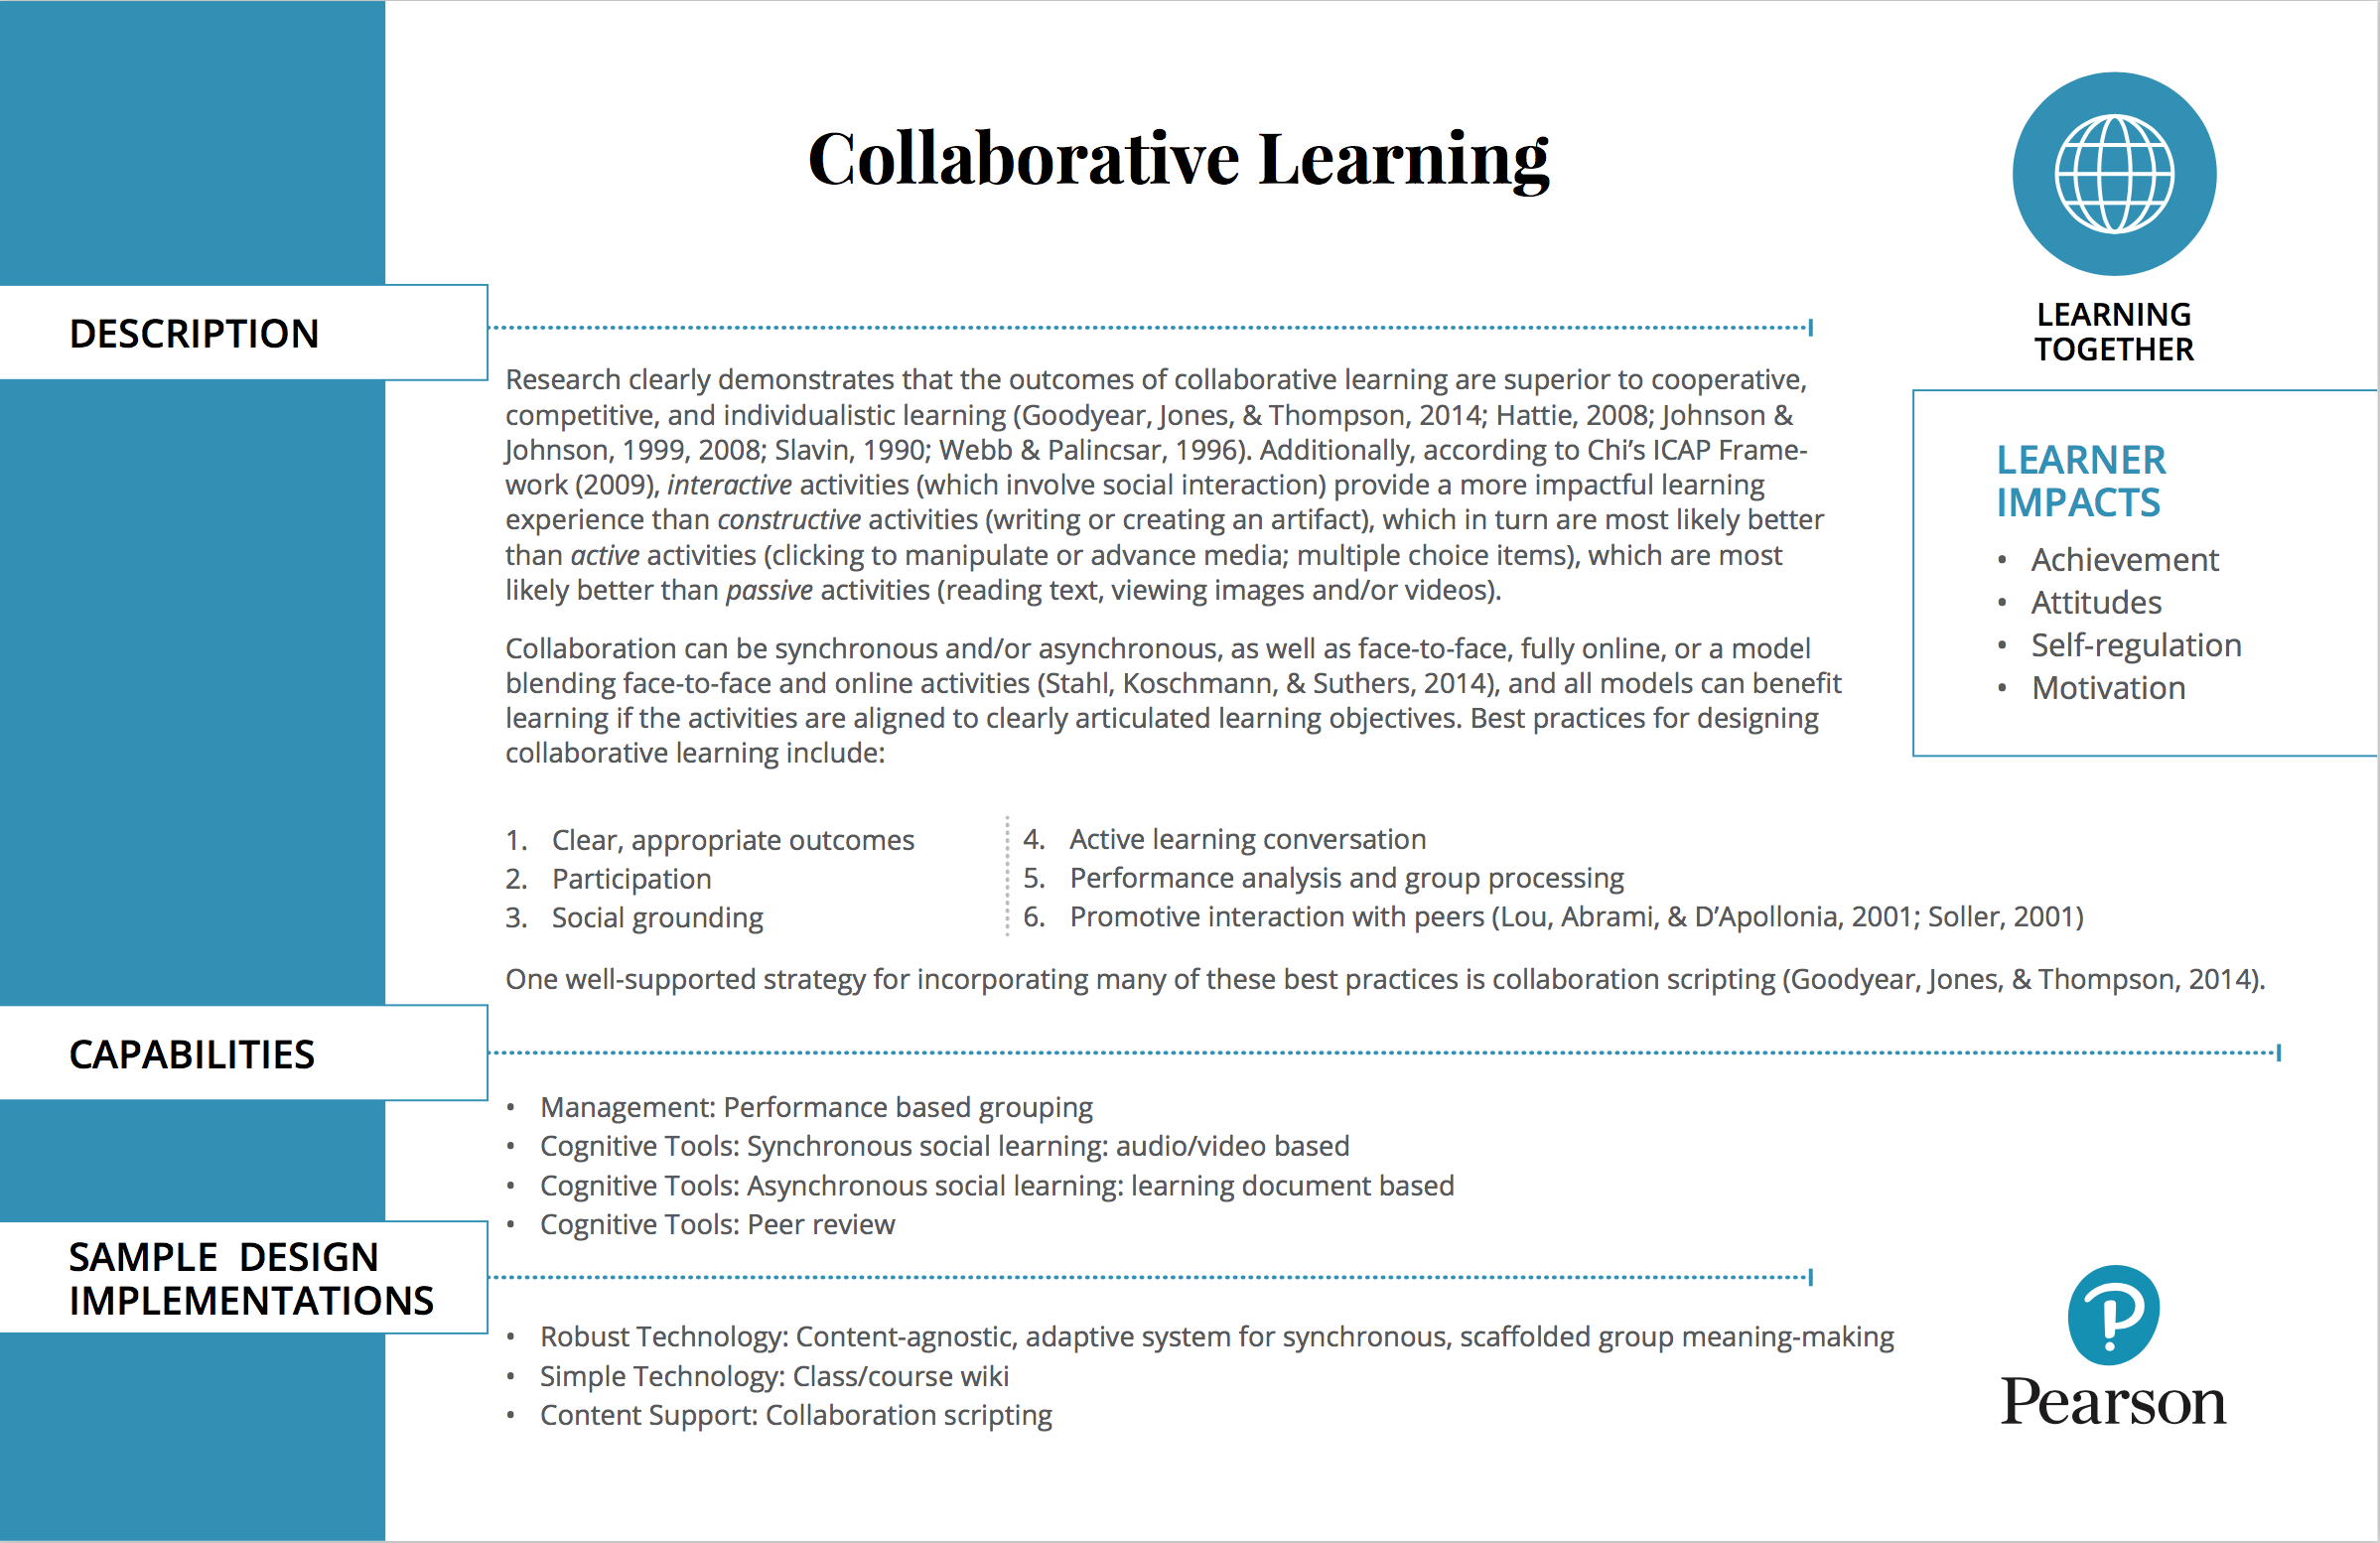 Pearson Learning Design Principle - Collaborative Learning